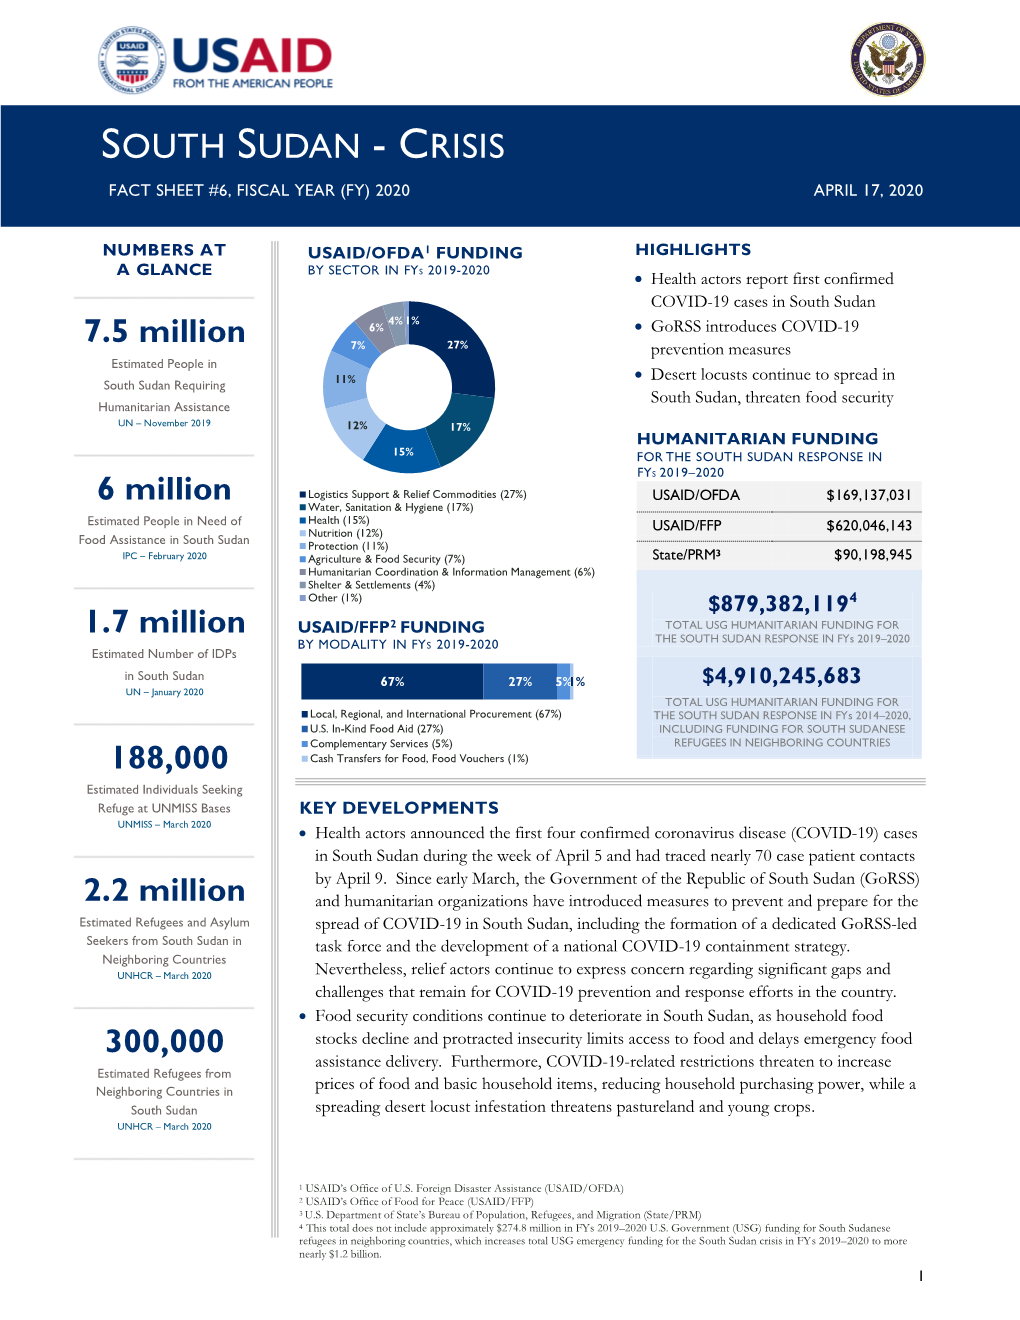 South Sudan - Crisis Fact Sheet #6, Fiscal Year (Fy) 2020 April 17, 2020